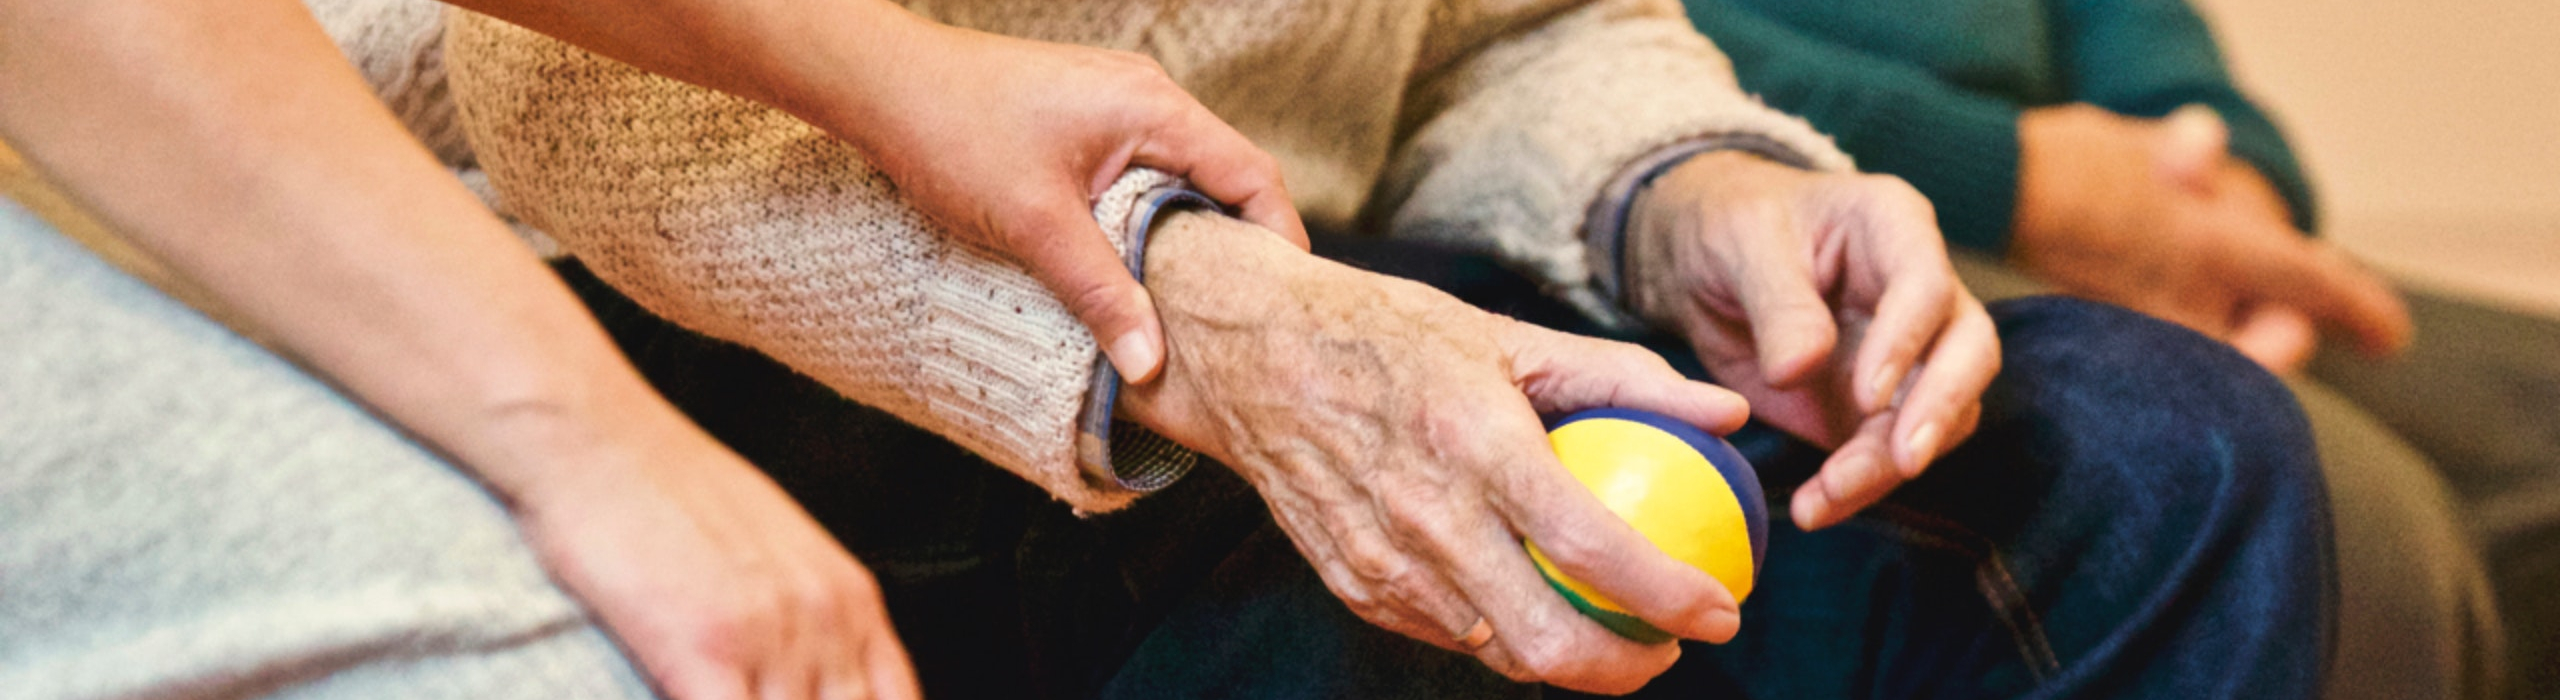 Hands of caregiver helping elderly person